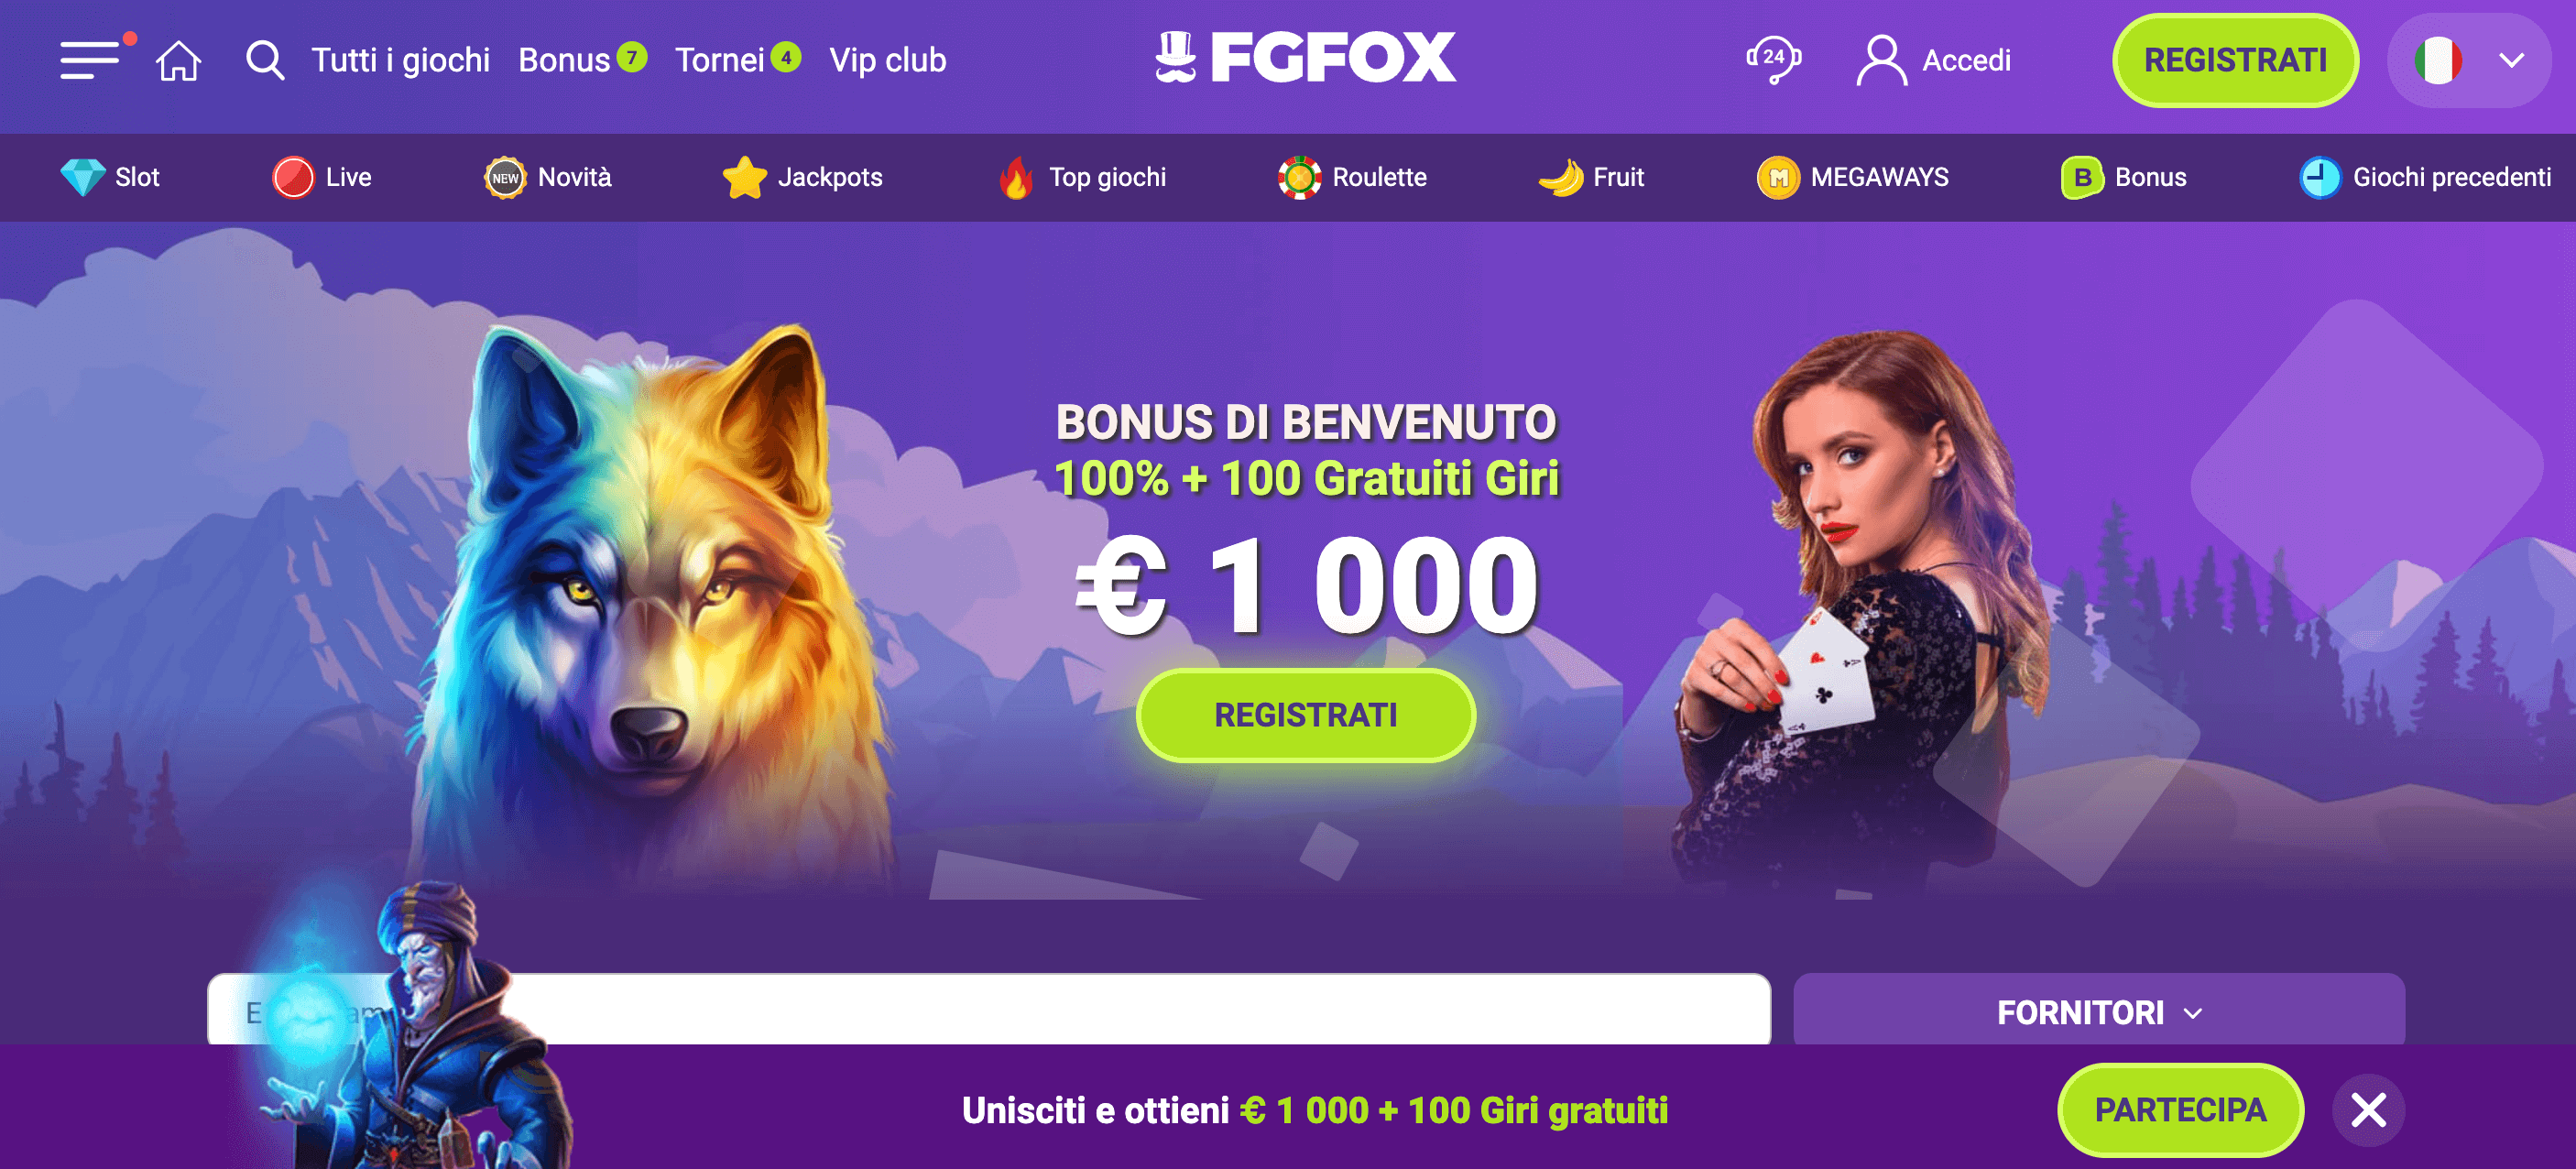 Fgfox Casino Home